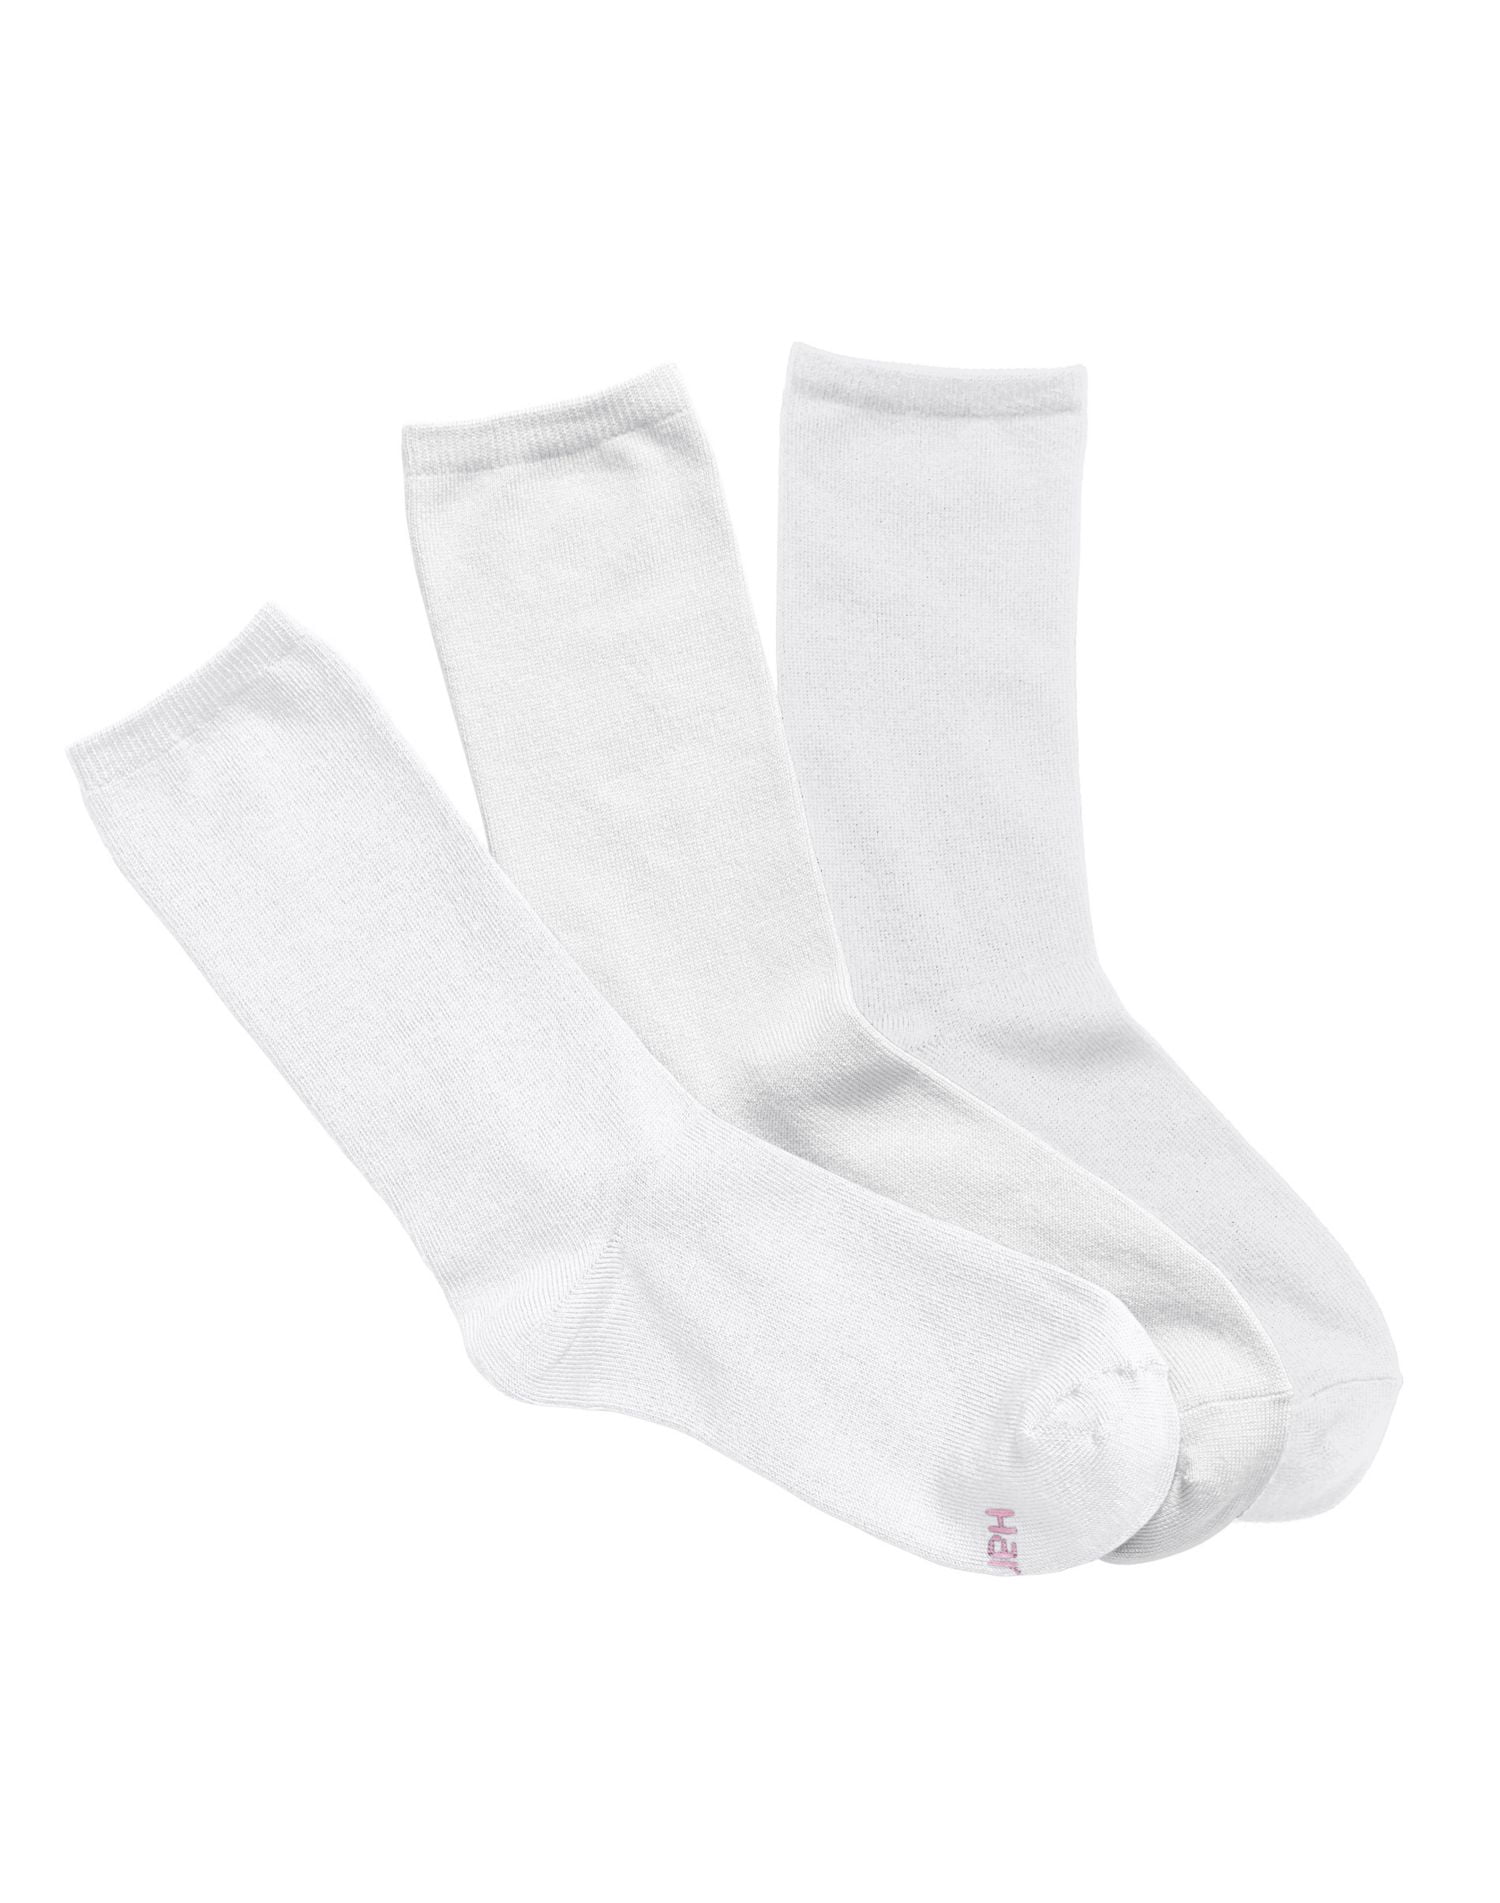 Hanes ComfortSoft Women`s Crew Socks, 911, White | Walmart Canada